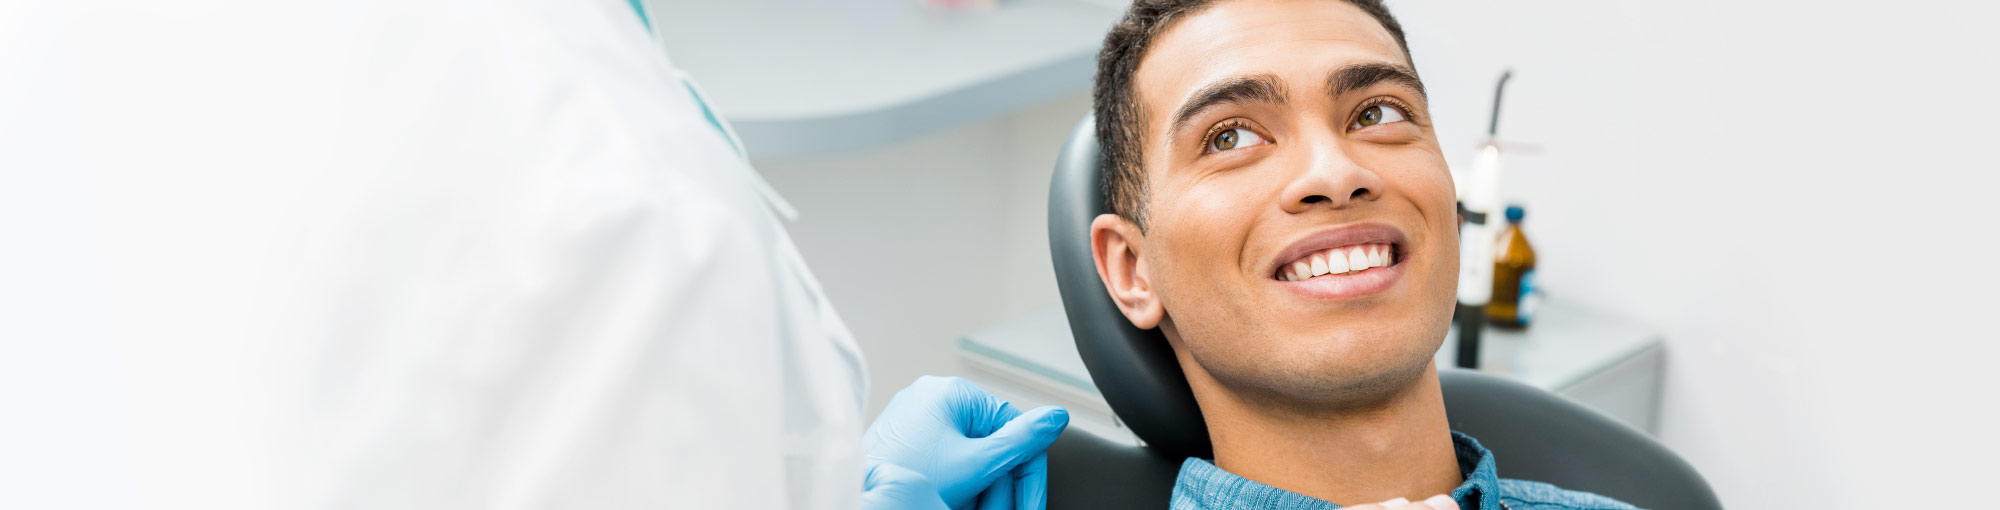 Patient Having A Dental Referral